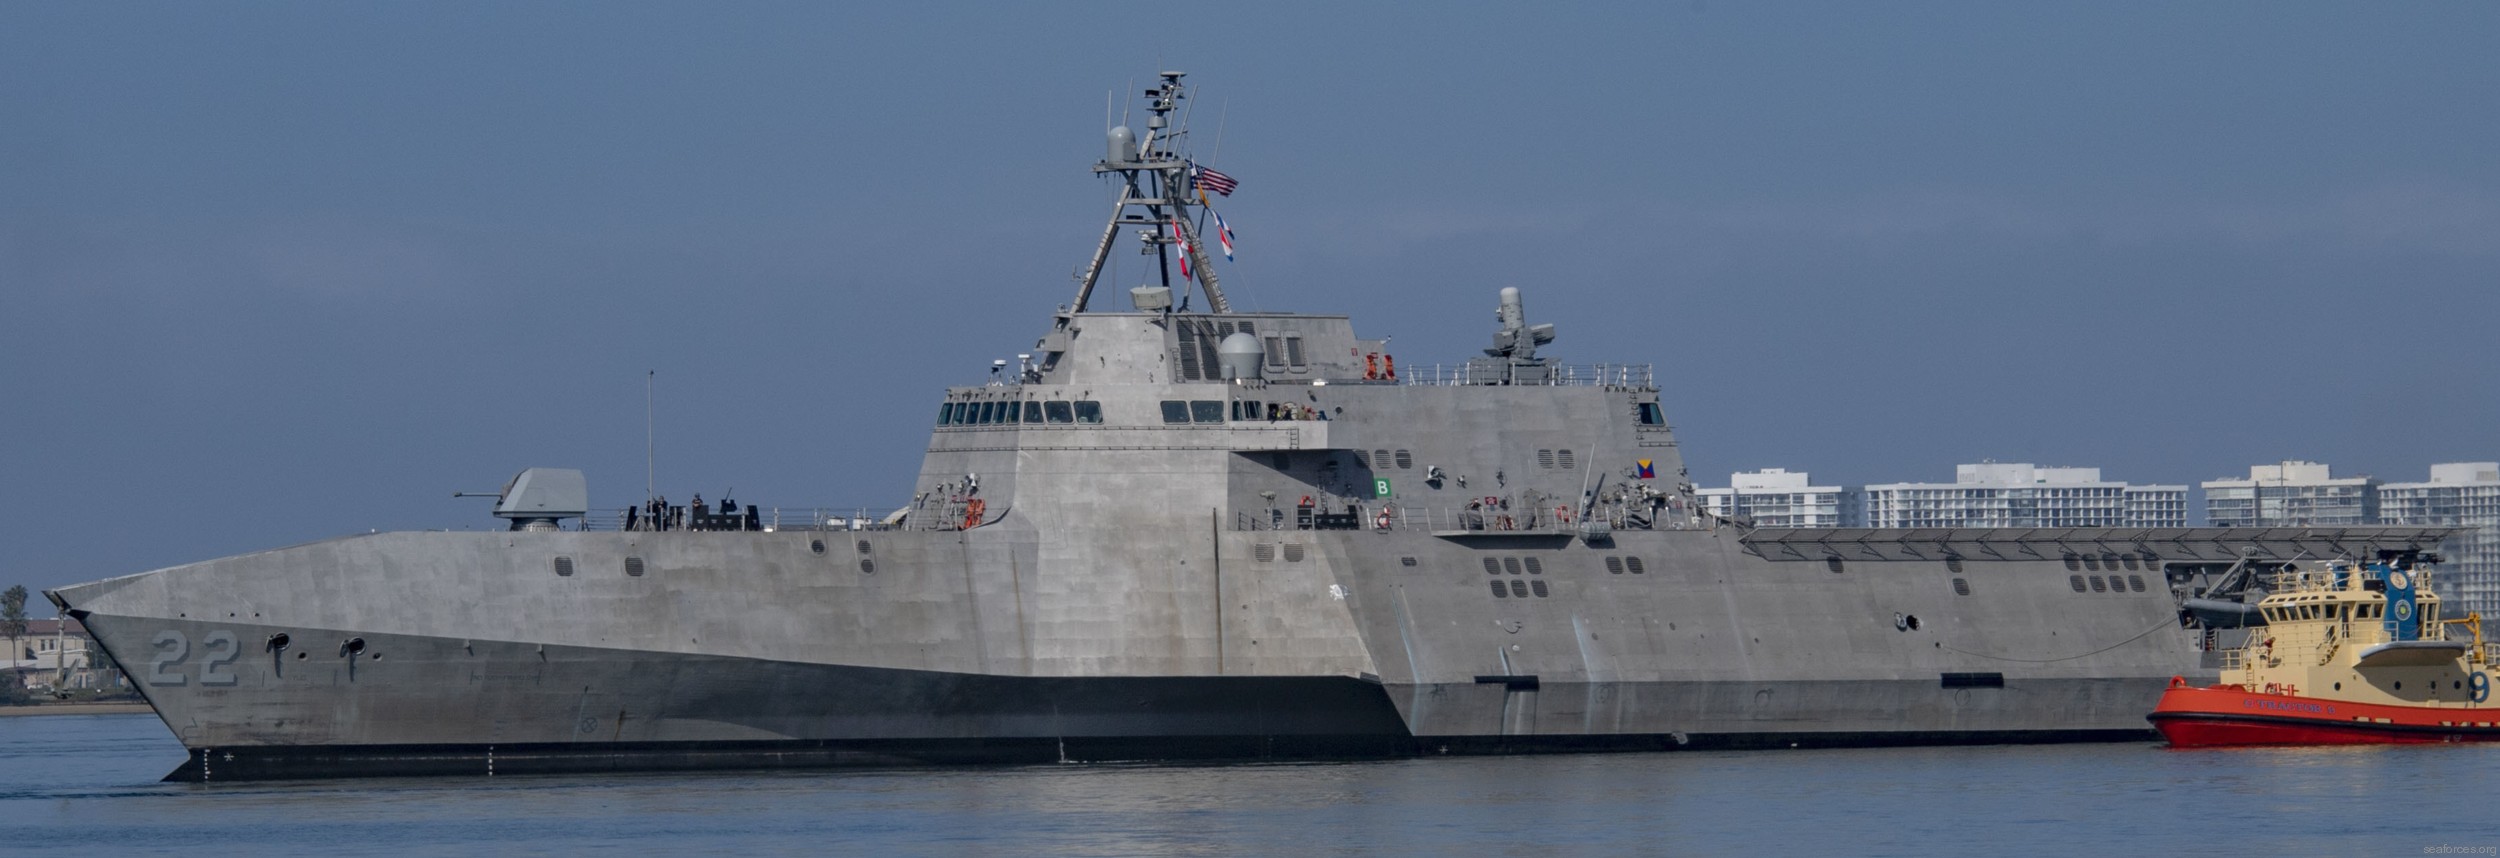 lcs-22 uss kansas city independence class littoral combat ship us navy 05 arriving san diego